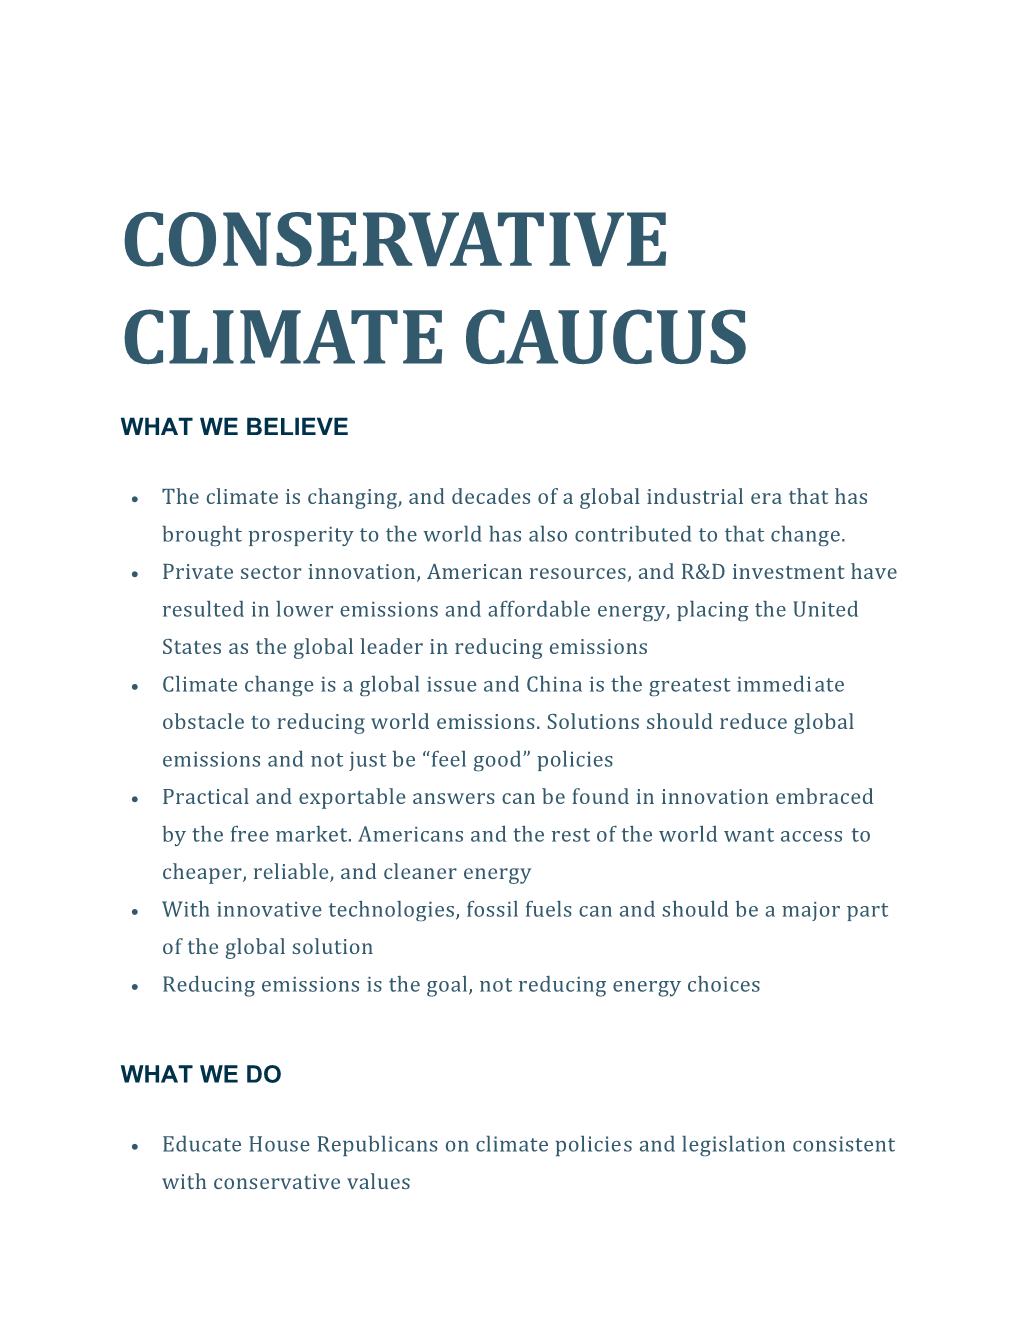 Conservative Climate Caucus